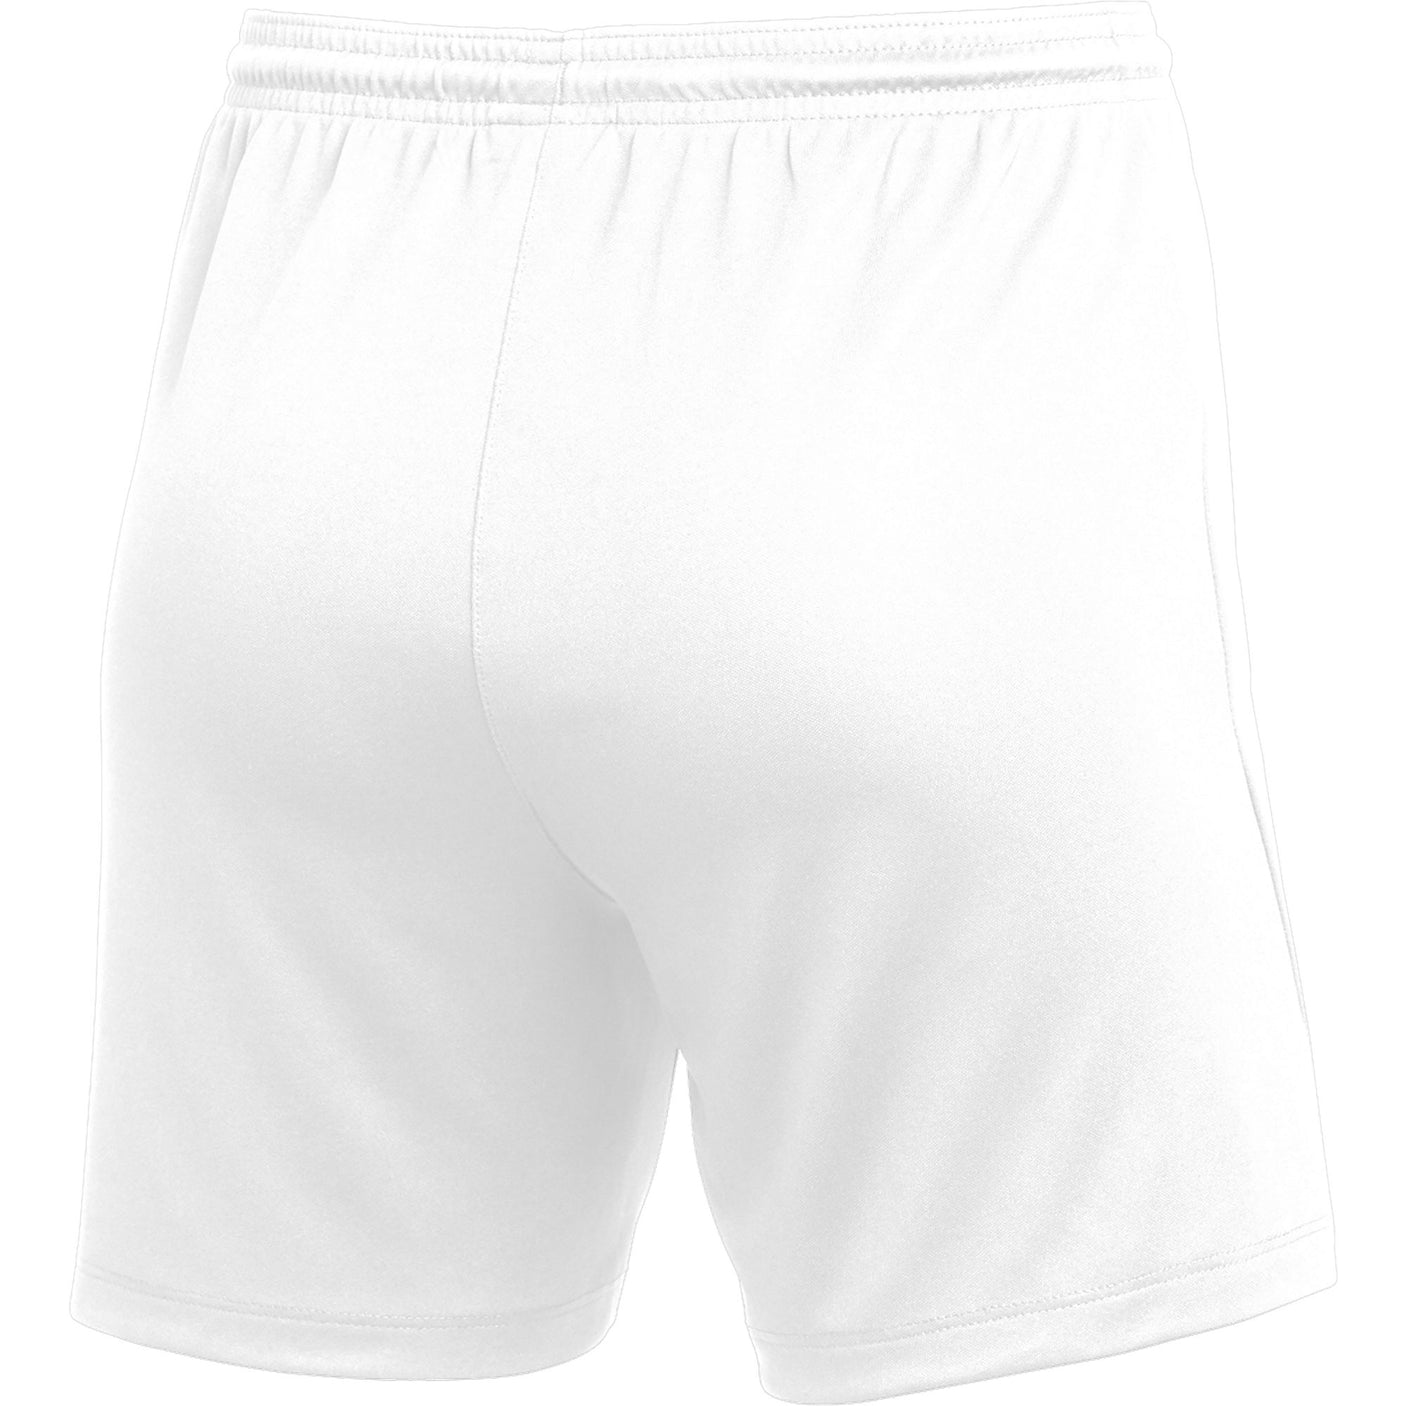 Nike Women's Park III Shorts White/Black Back